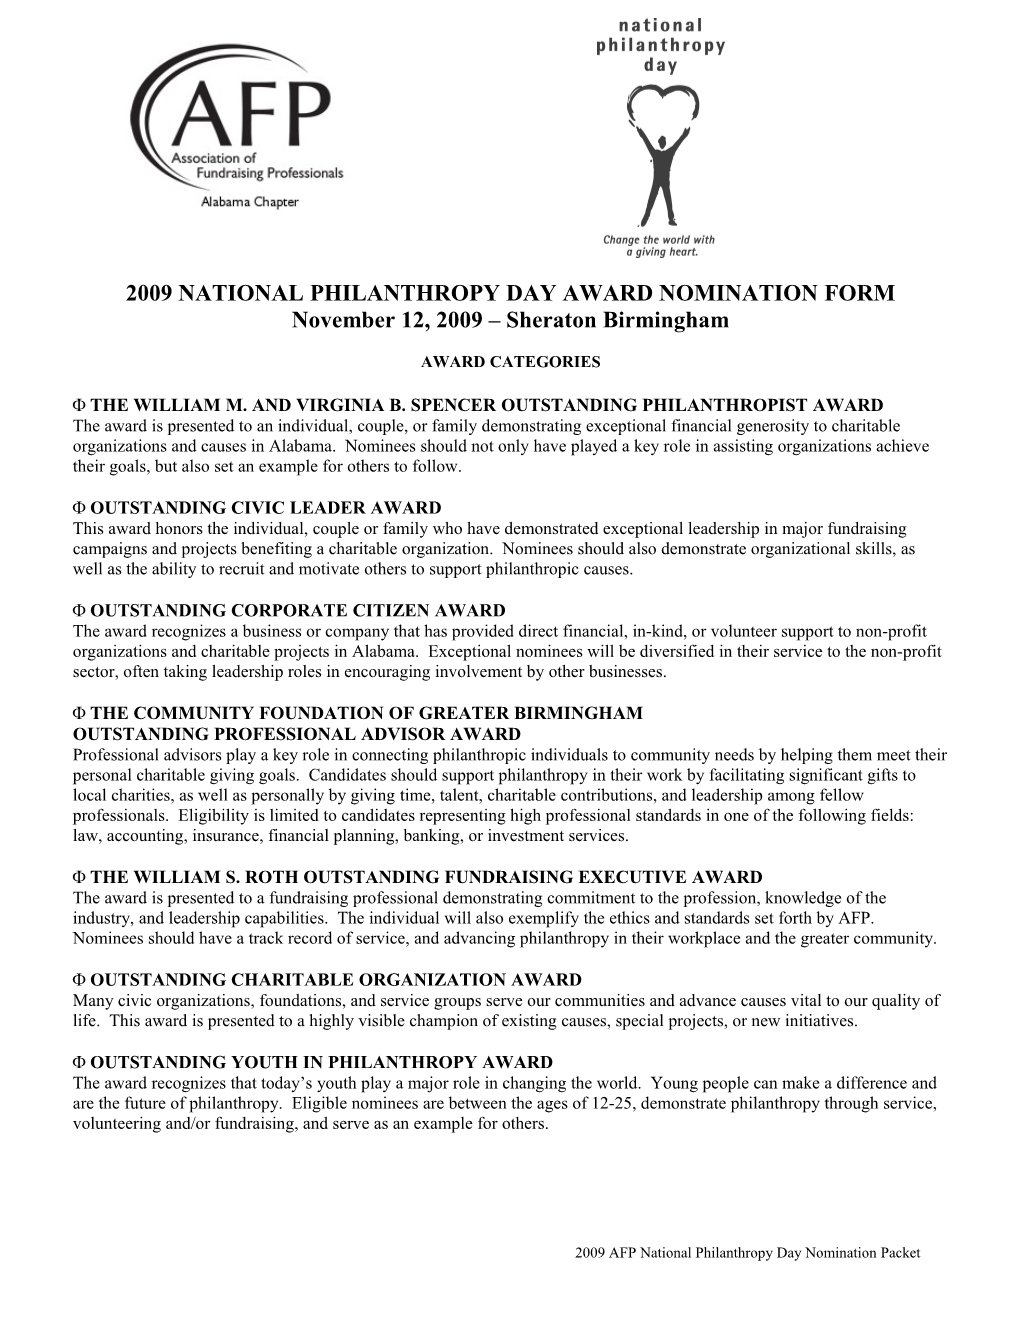 2009 National Philanthropy Day Award Nomination Form